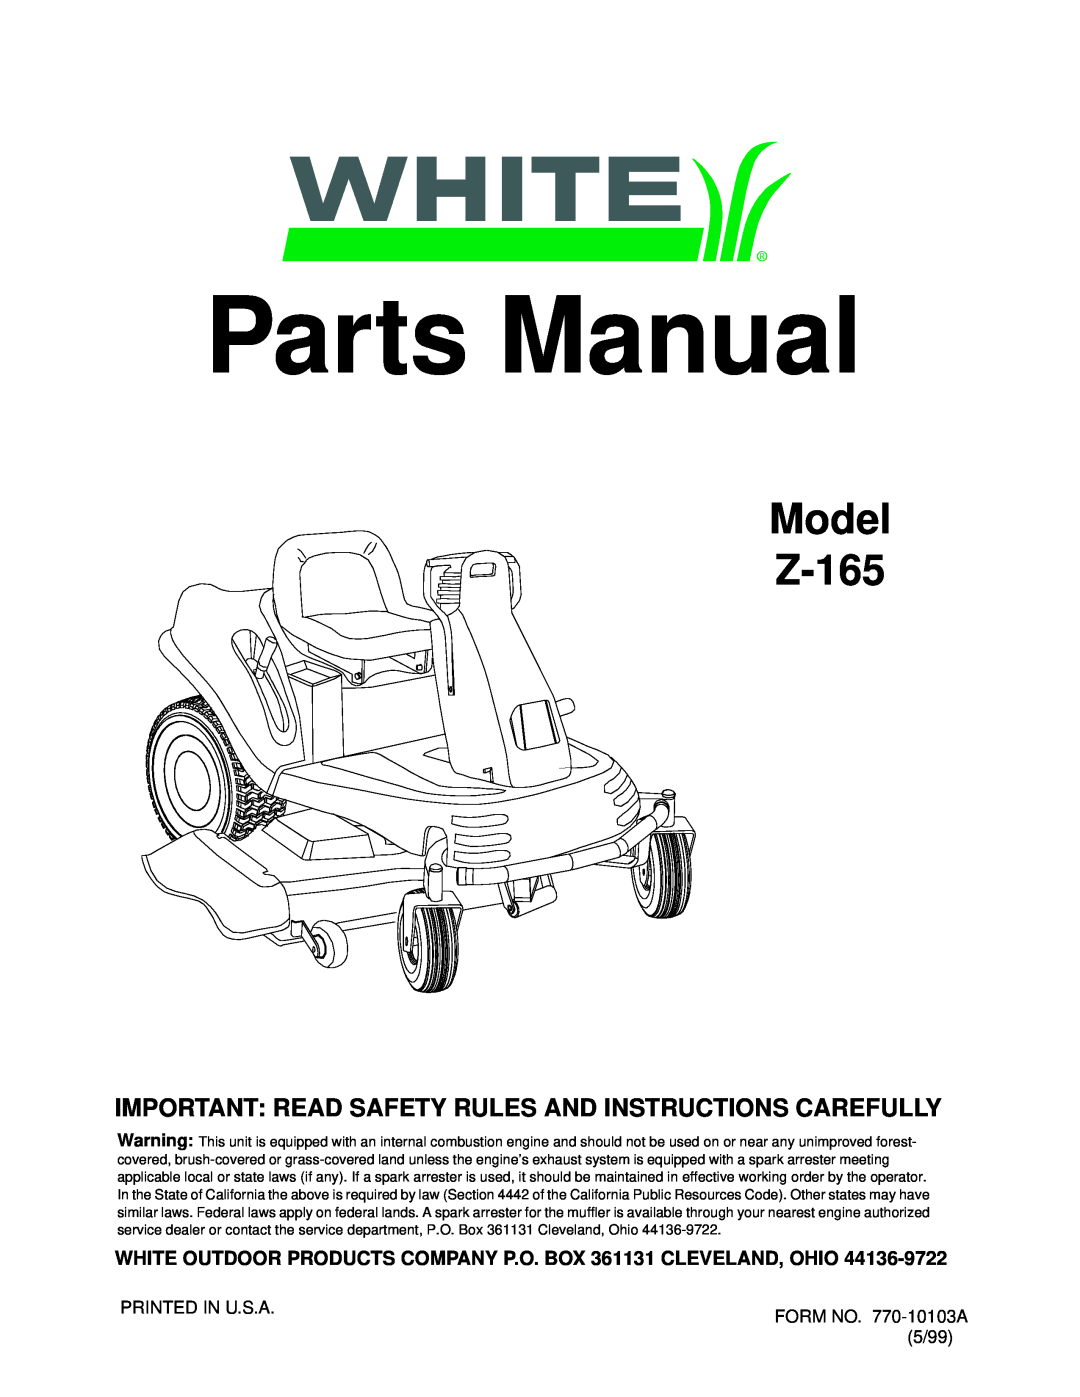 White manual Model Z-165, FORM NO. 770-10103A, 5/99, Parts Manual 